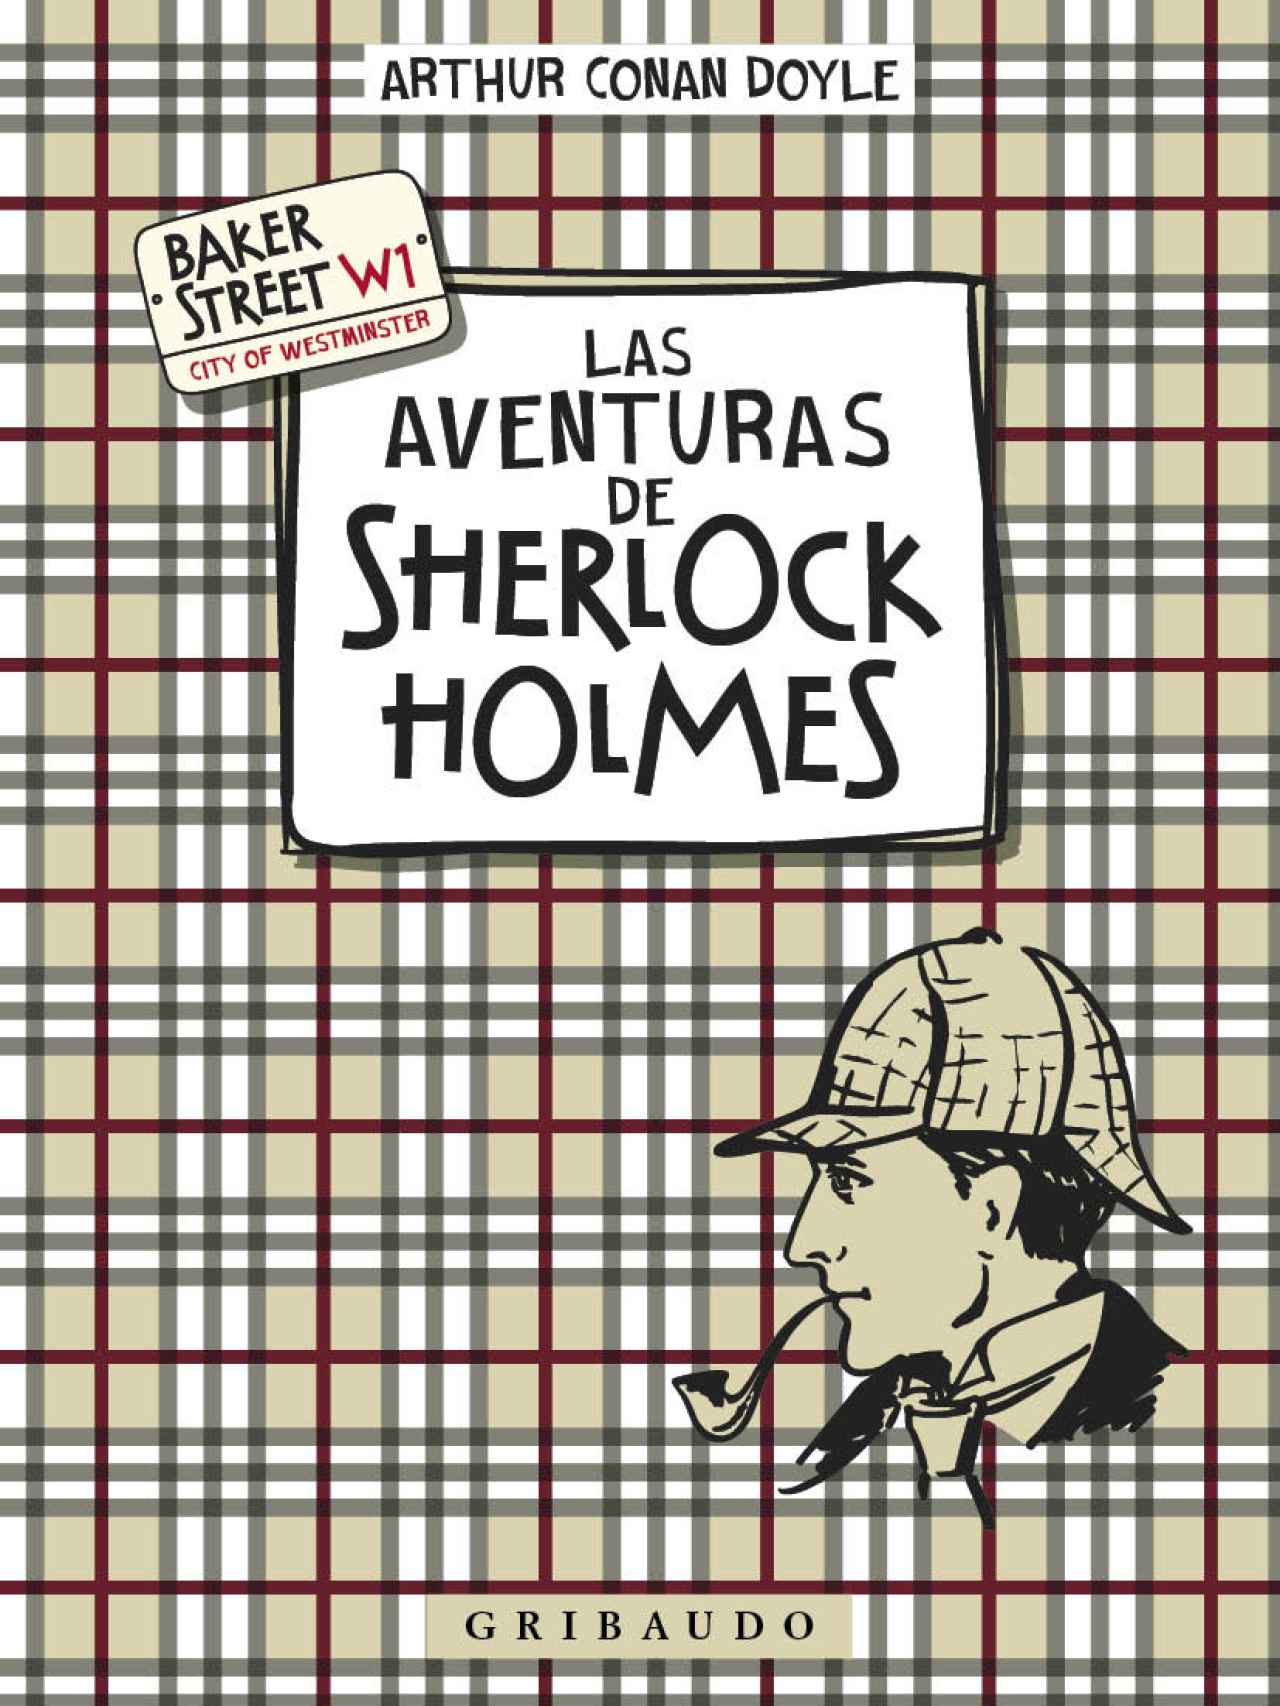 'Sherlock Holmes'